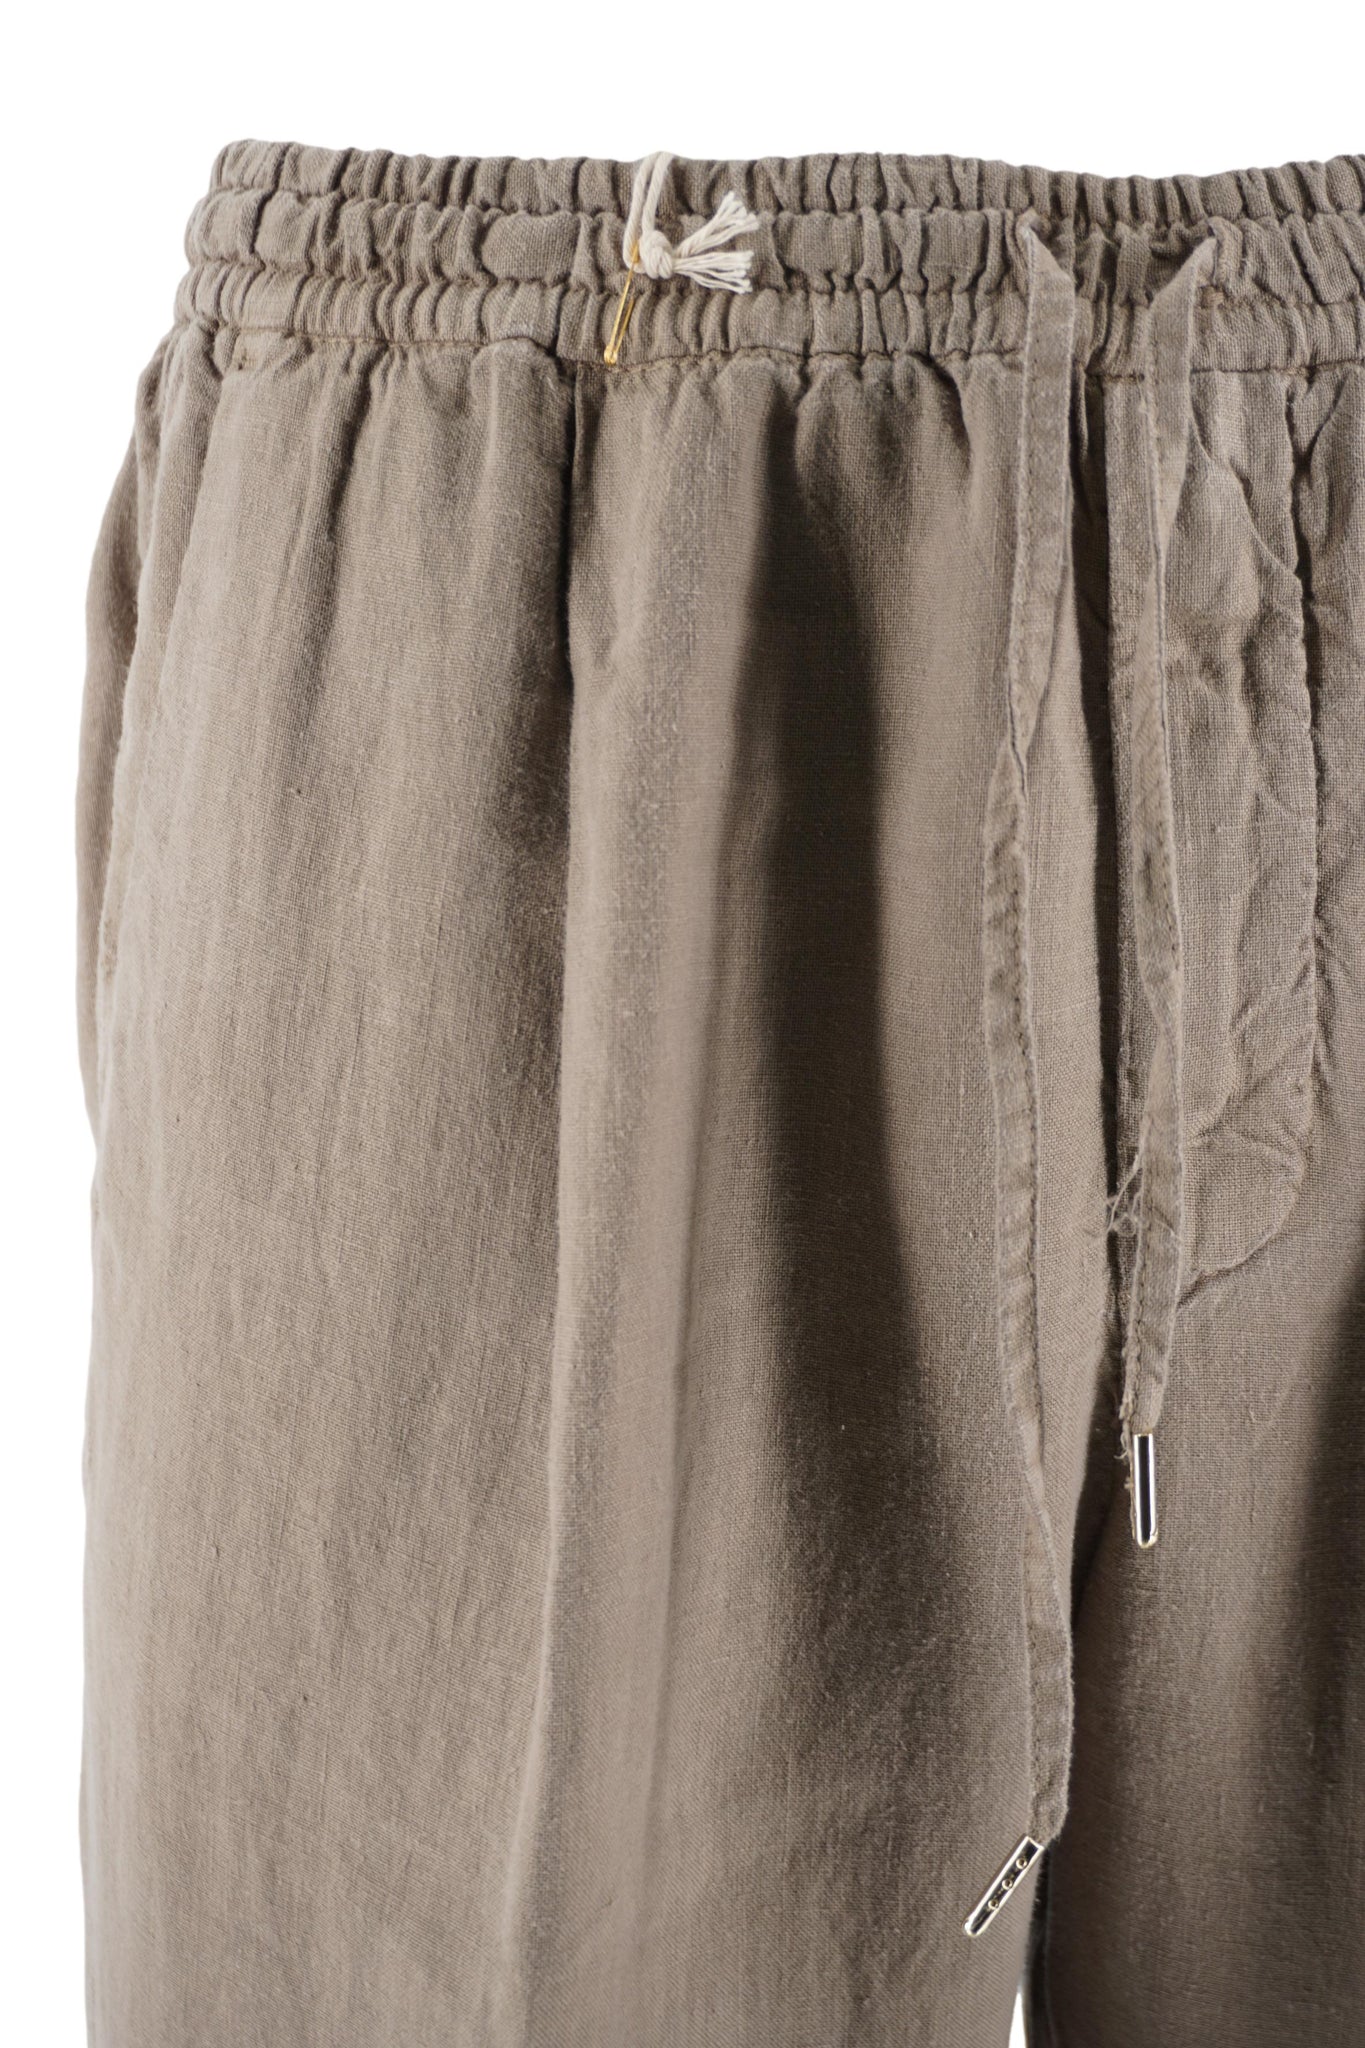 Pantalone Modello Wimbledon in Lino / Beige - Ideal Moda